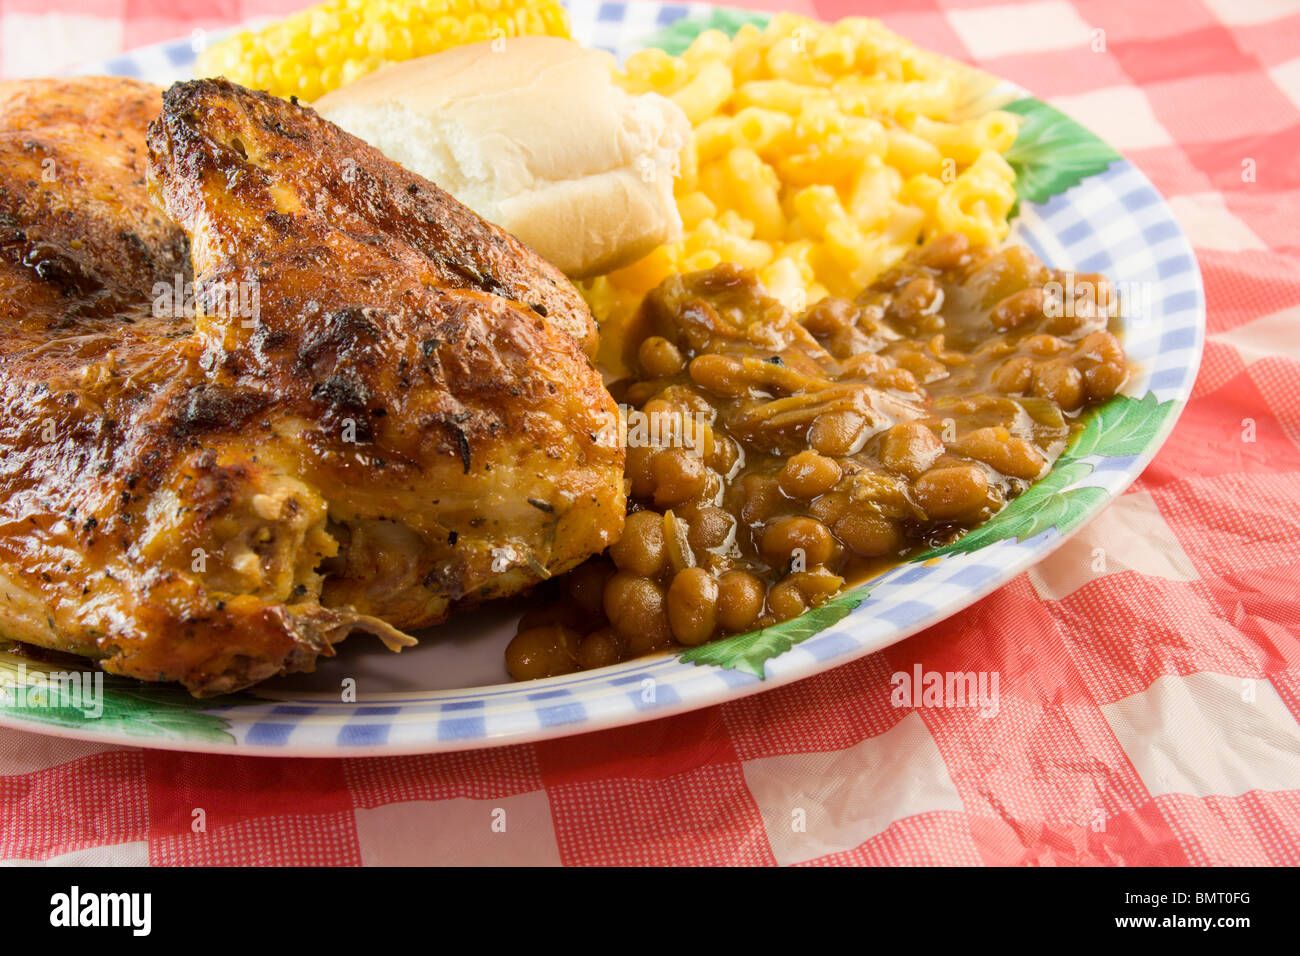 Pollo a la Barbacoa con frijoles, macarrones, estilo picnic sobre un mantel rojo a cuadros Foto de stock